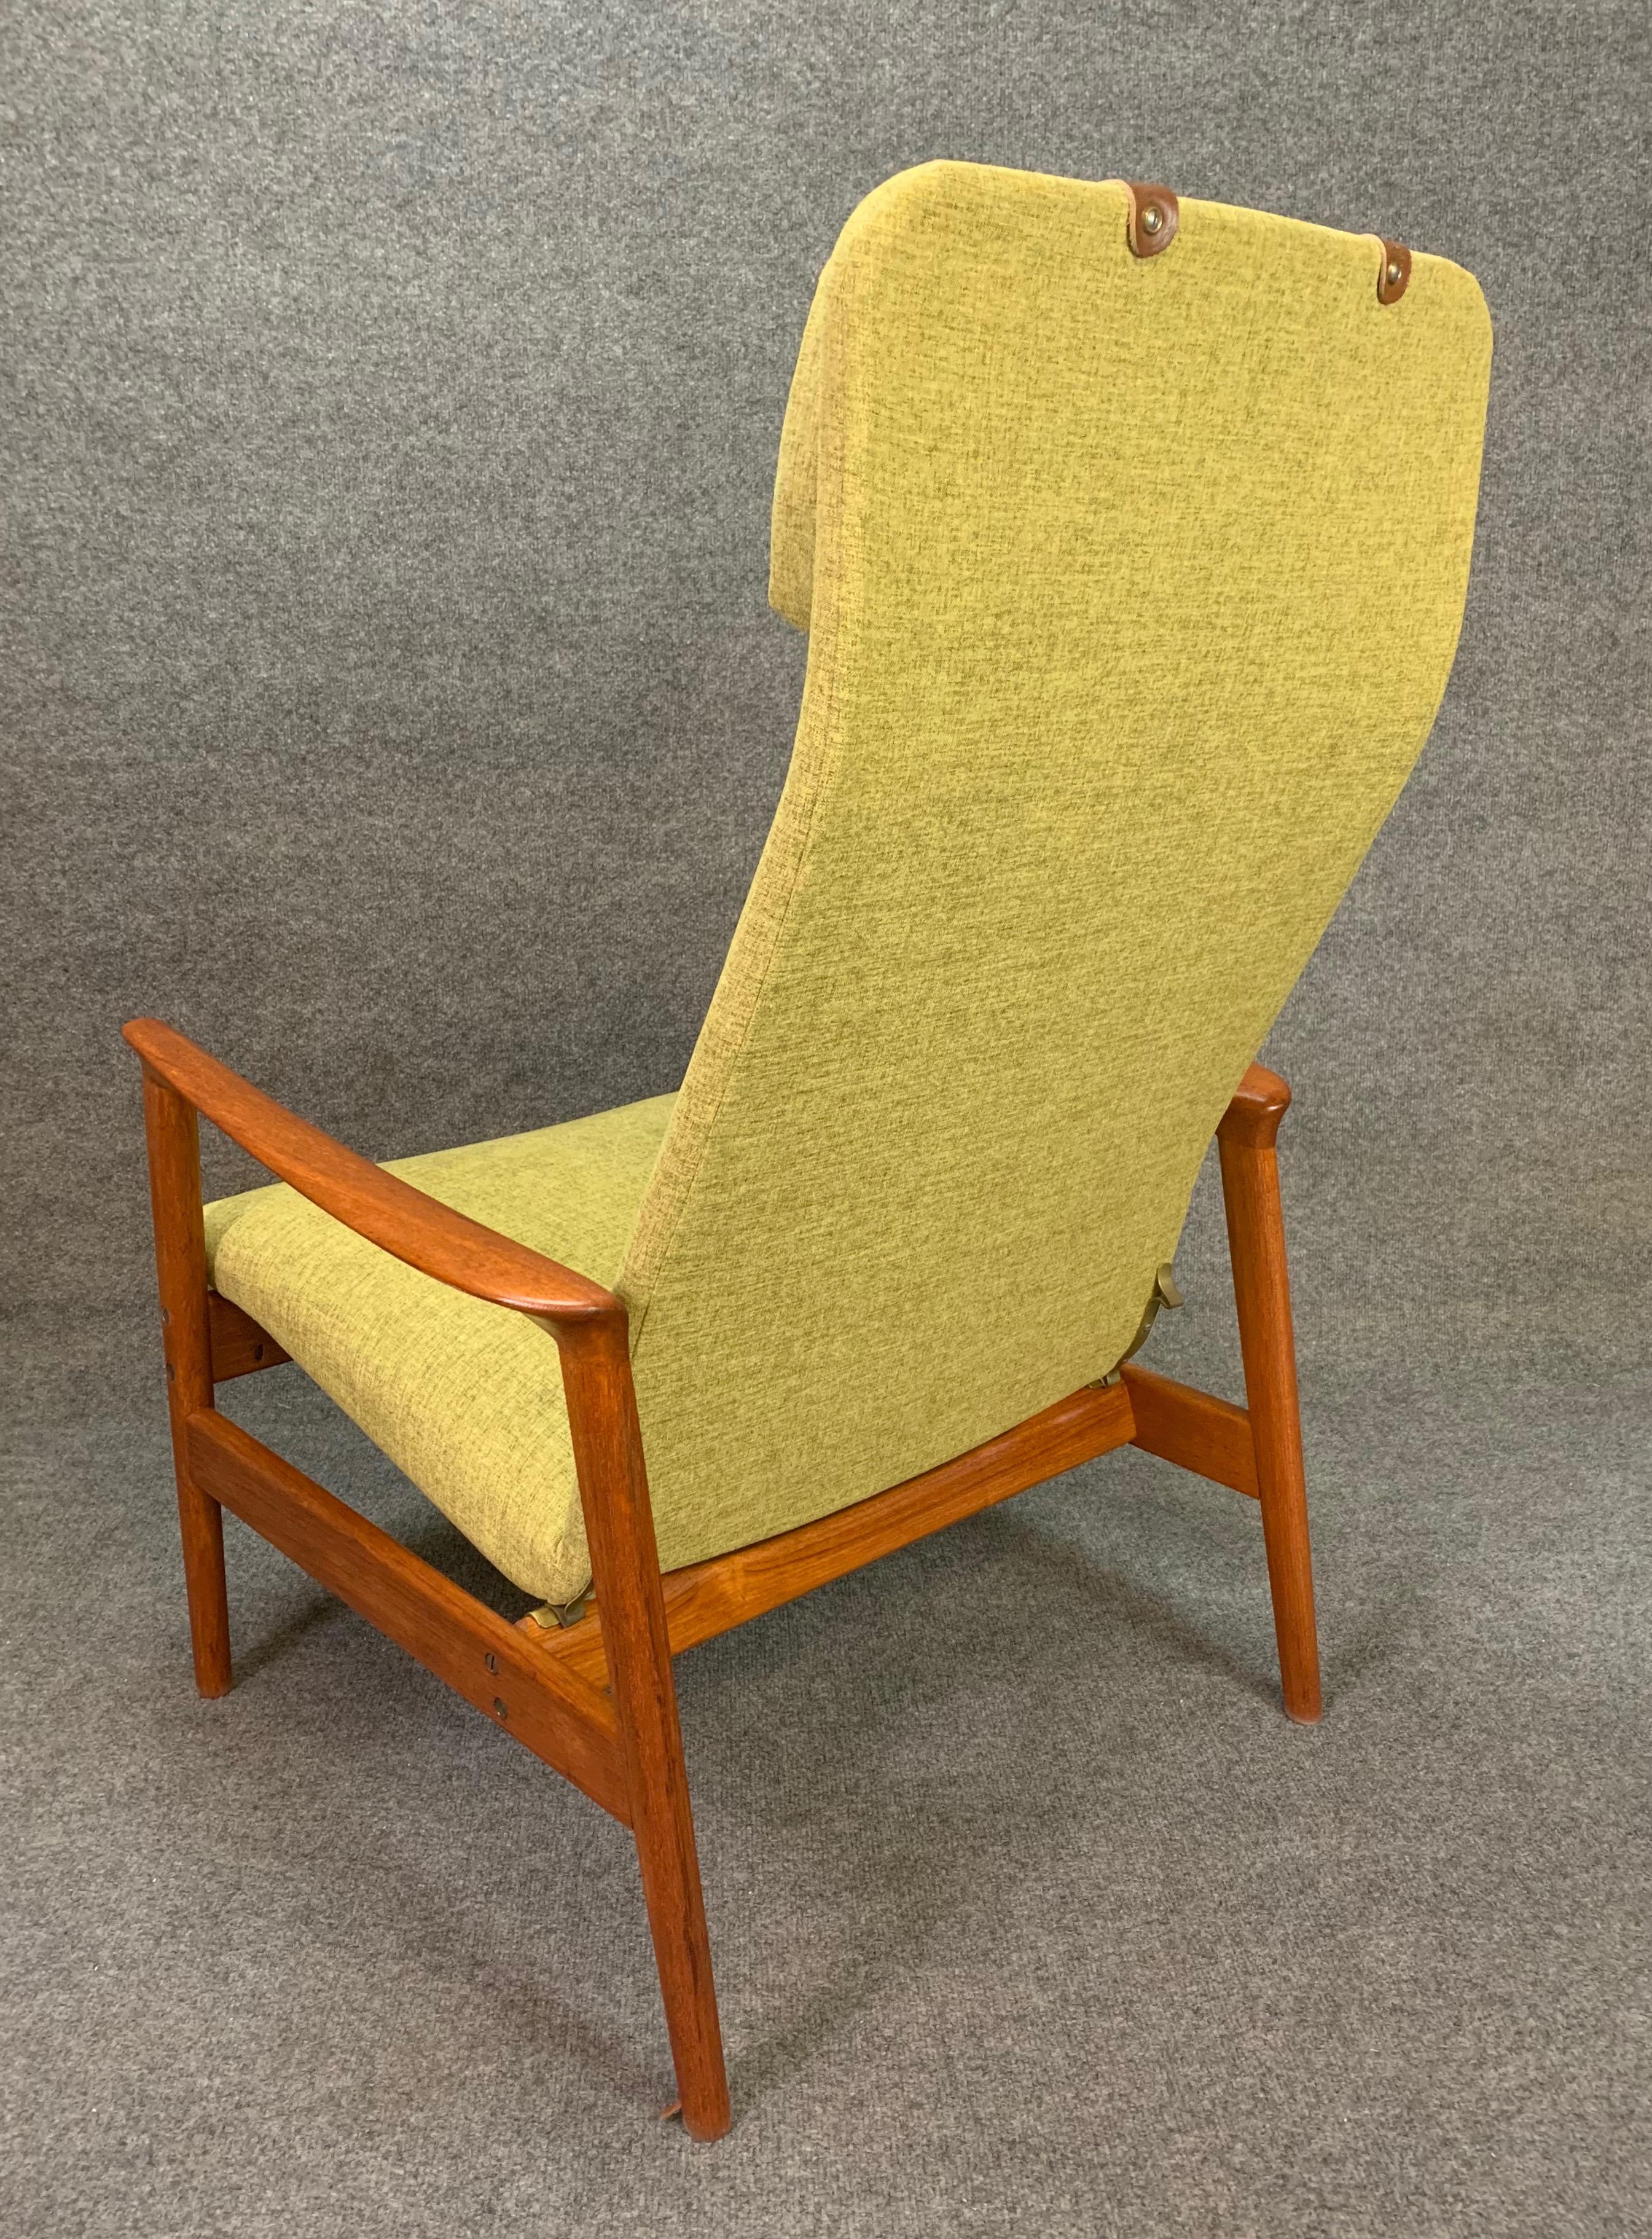 Scandinavian Modern Vintage Scandinavian Midcentury Teak DUX Lounge Chair Recliner by Alf Svensson